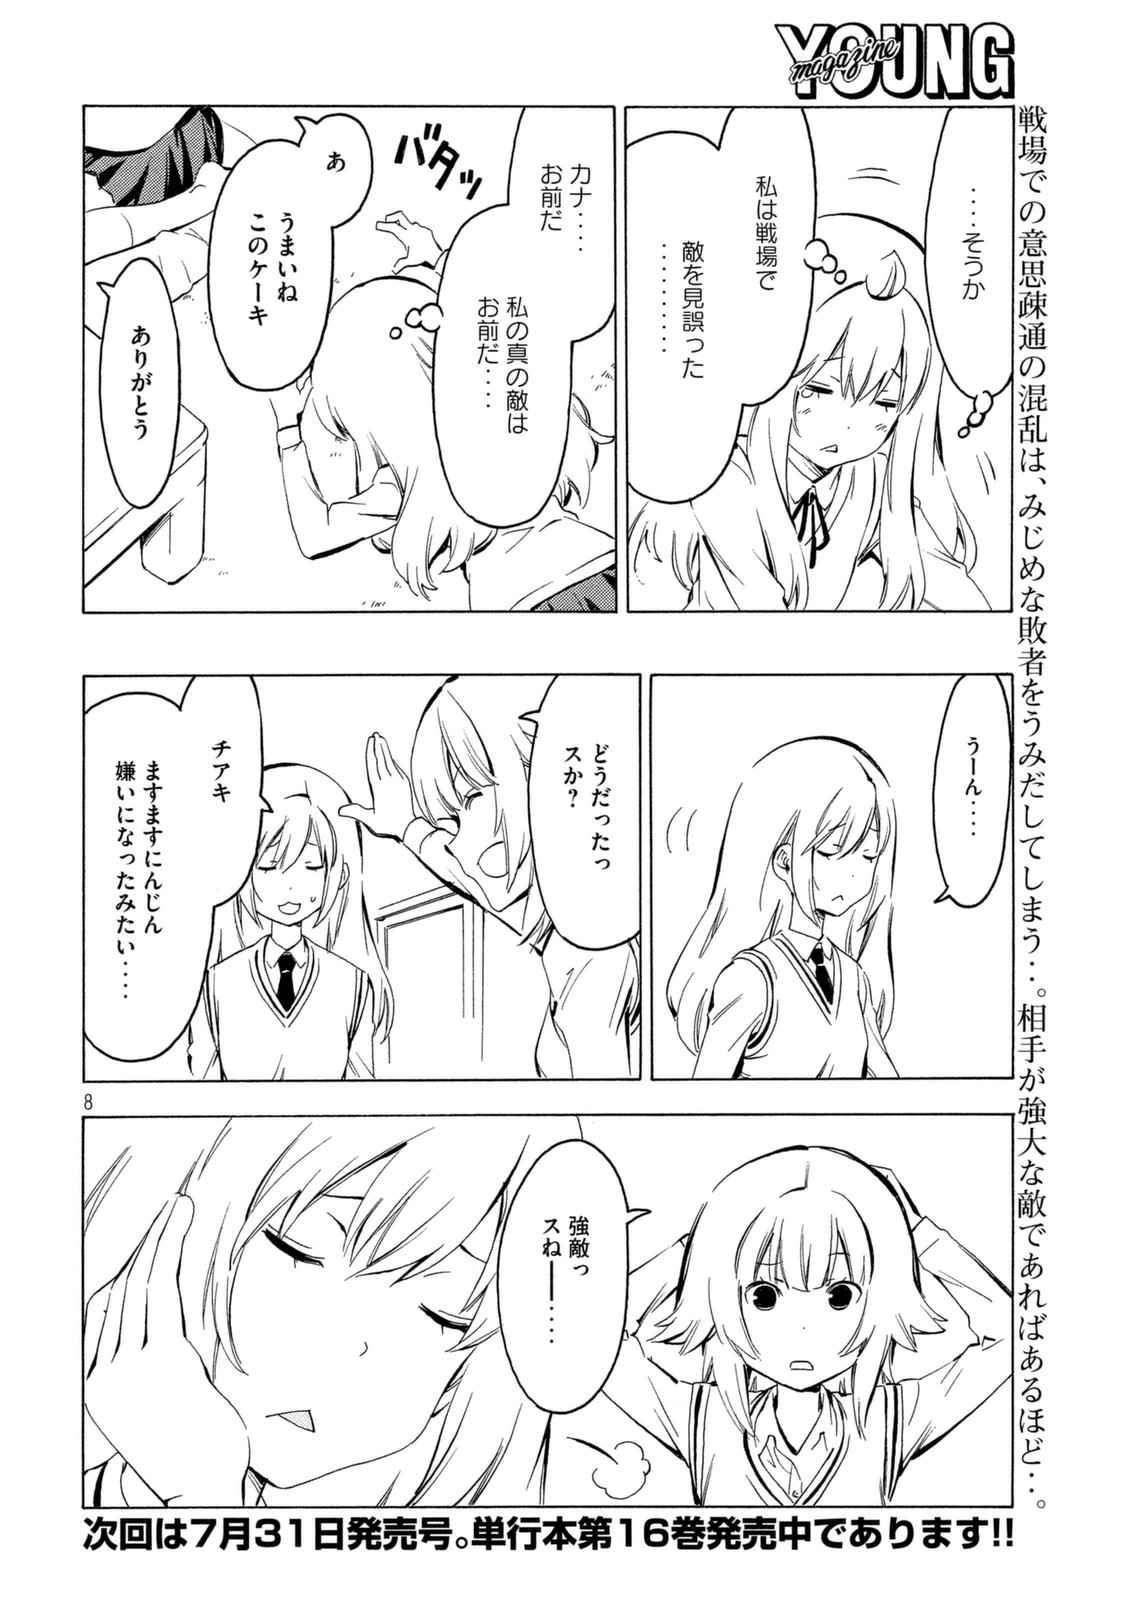 Minami-ke - Chapter 321 - Page 8